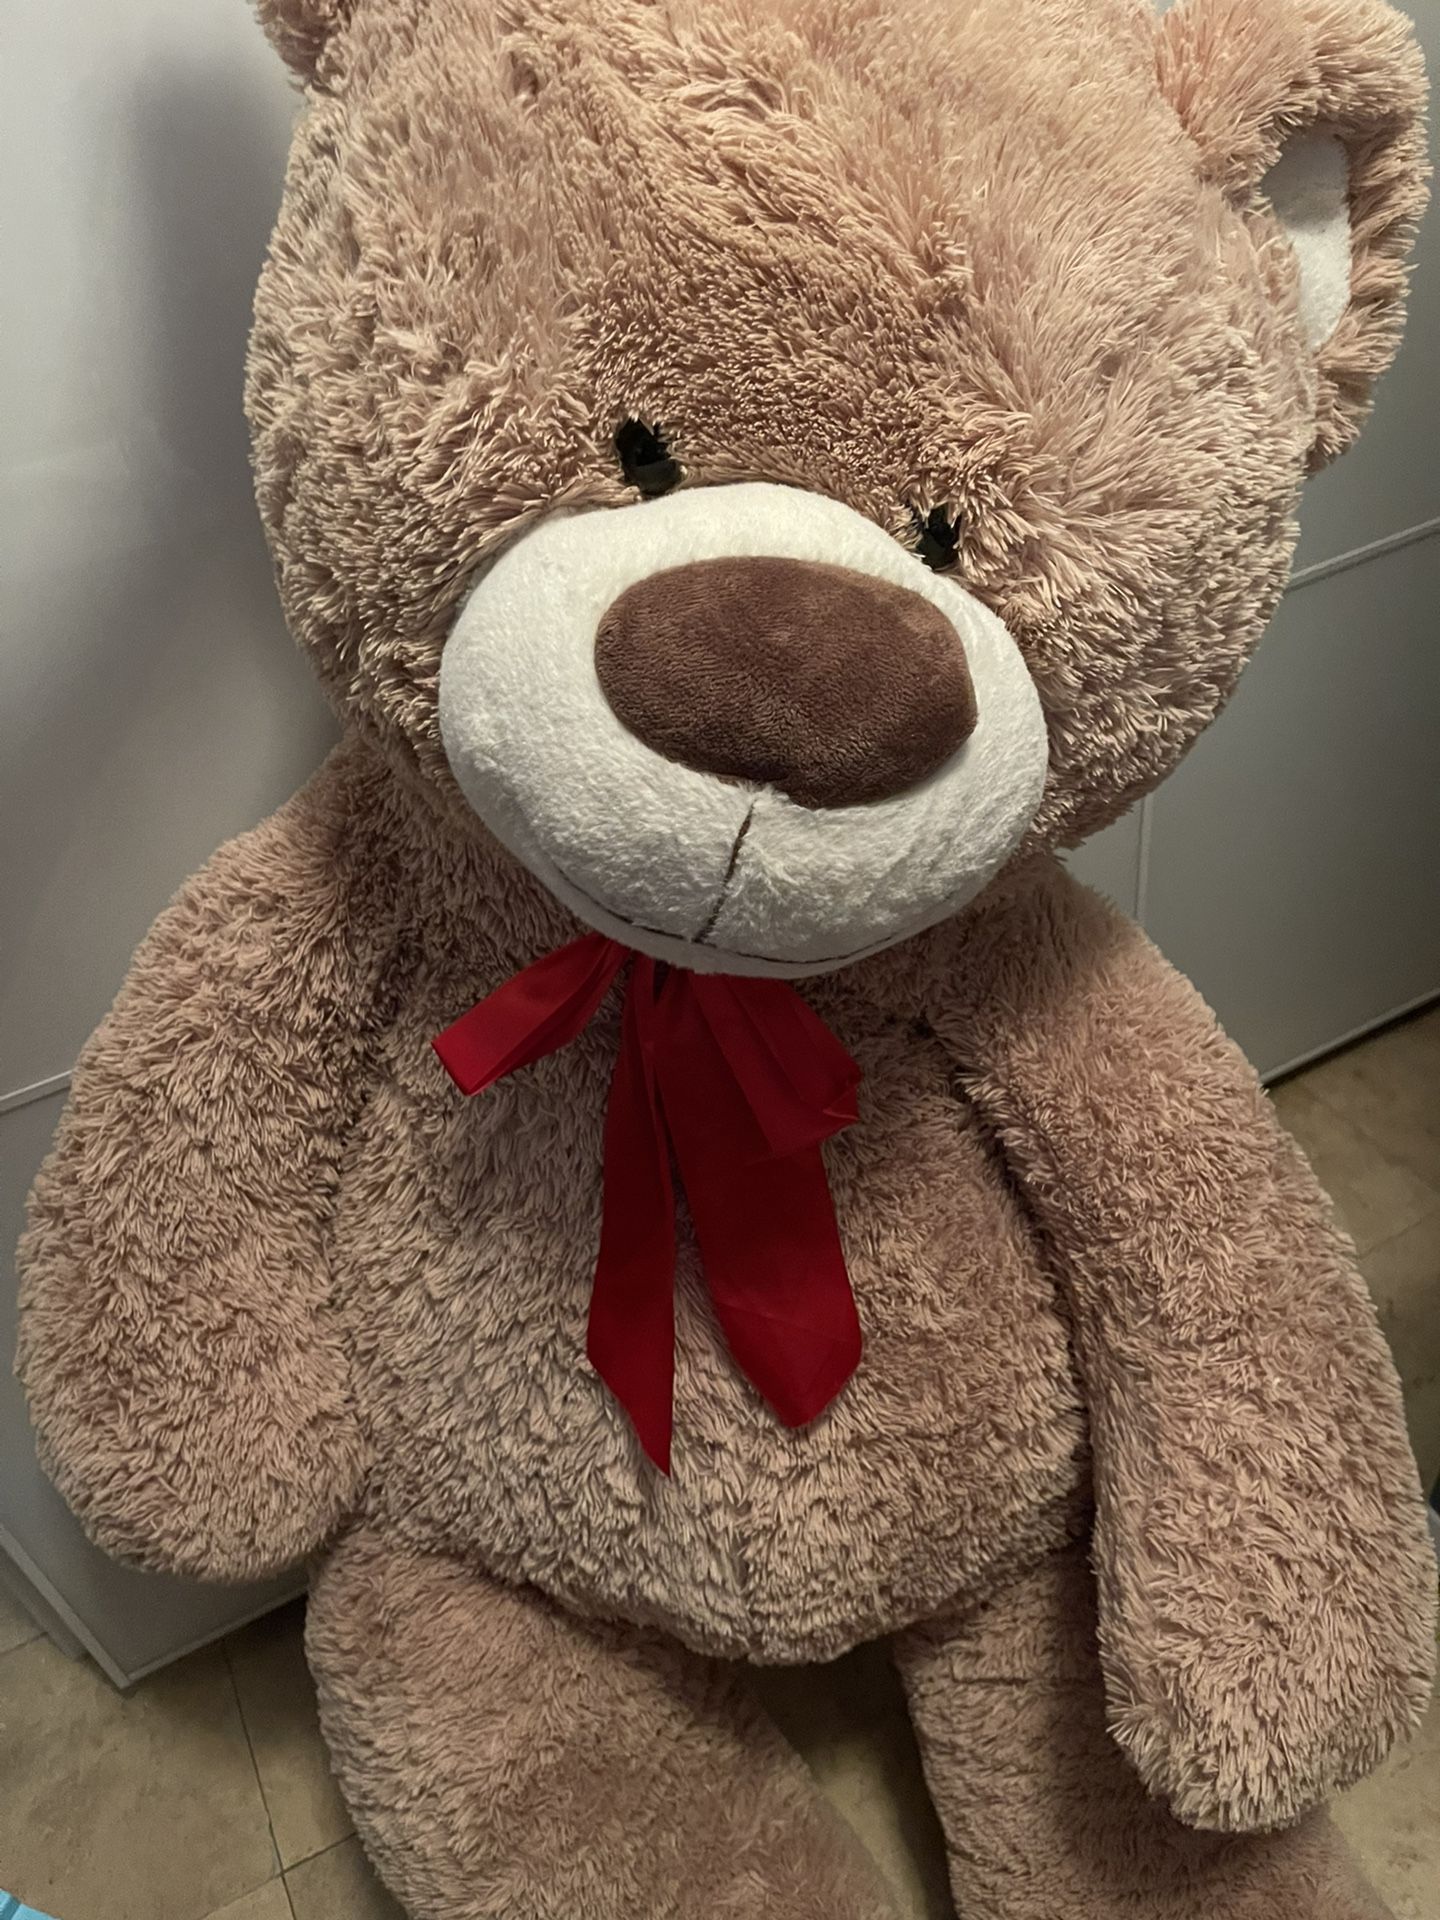 Giant Teddy Bear Plush Toy Stuffed Animal